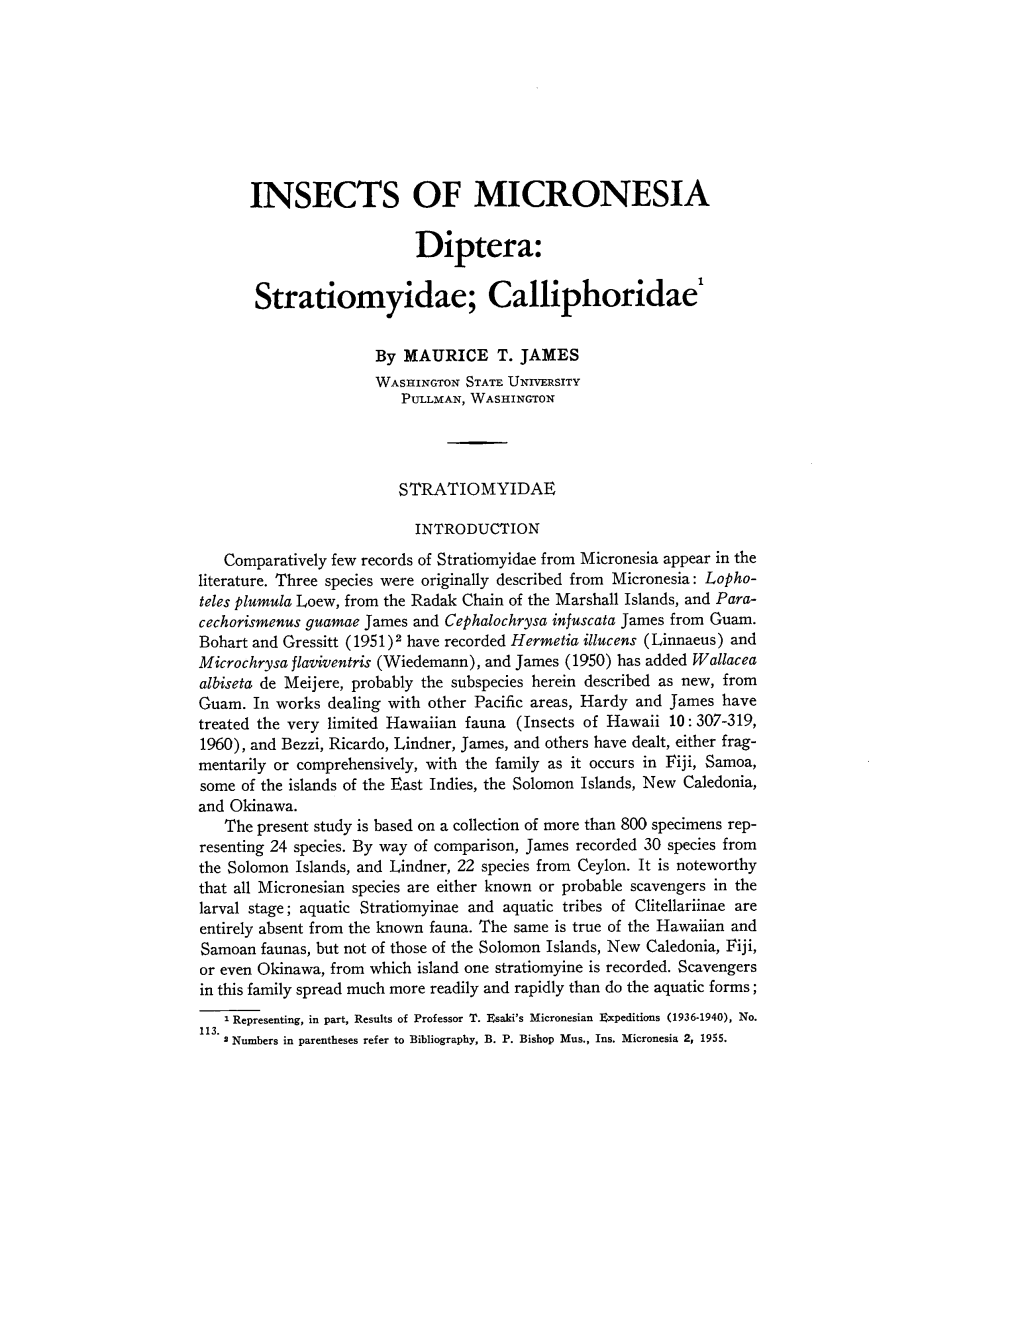 INSECTS of MICRONESIA Diptera: Stratiomyidae; Calliphoridae1